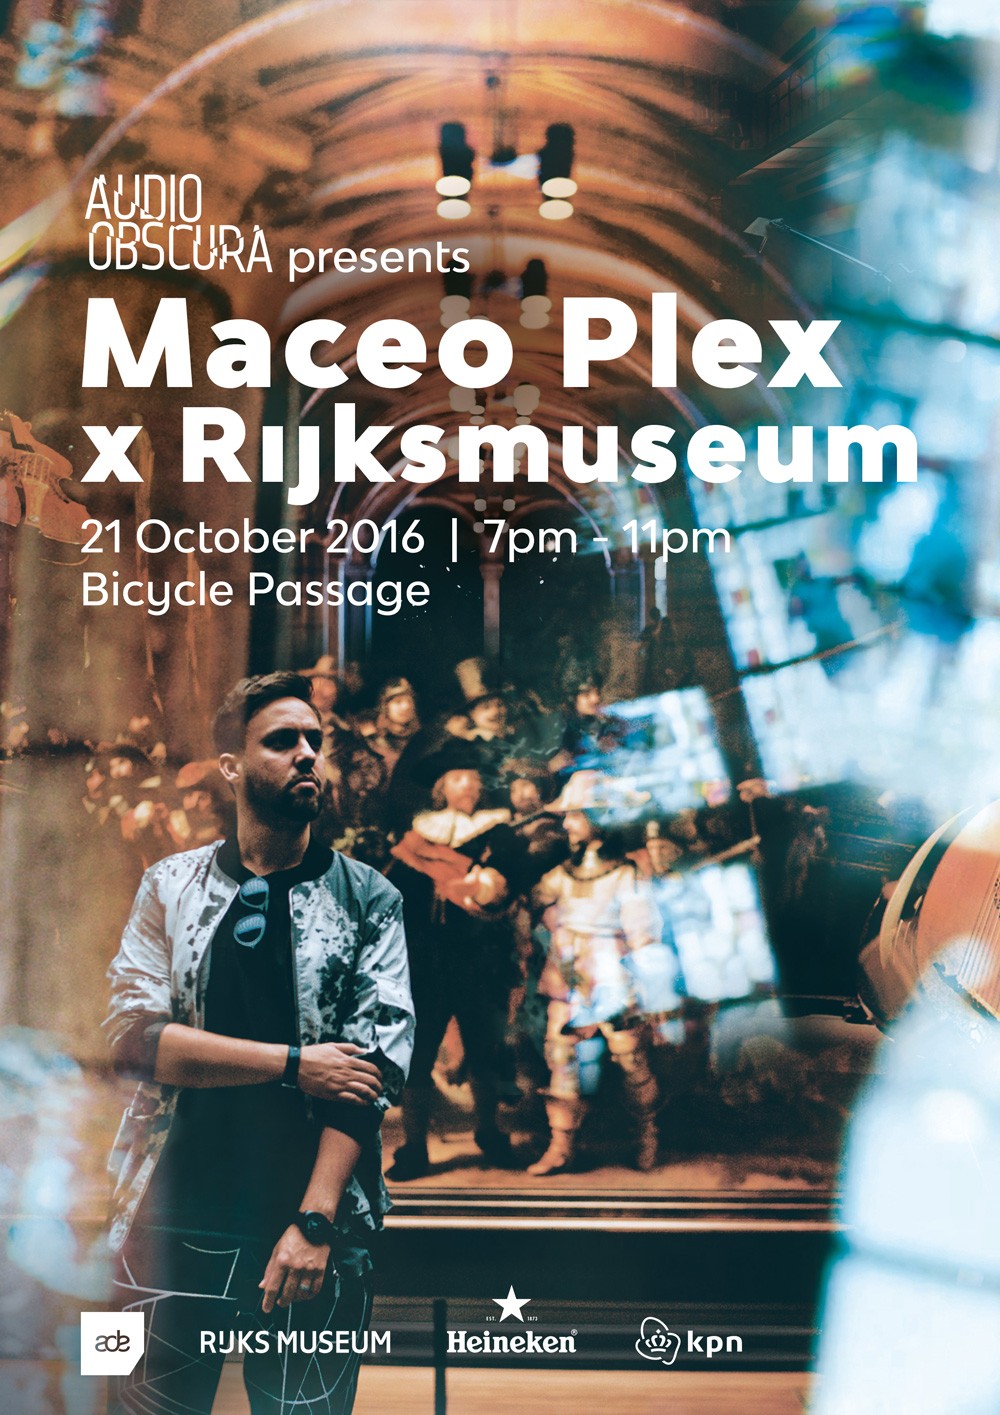 Audio_Obscura_presents_Maceo_Plex_Rijksmuseum